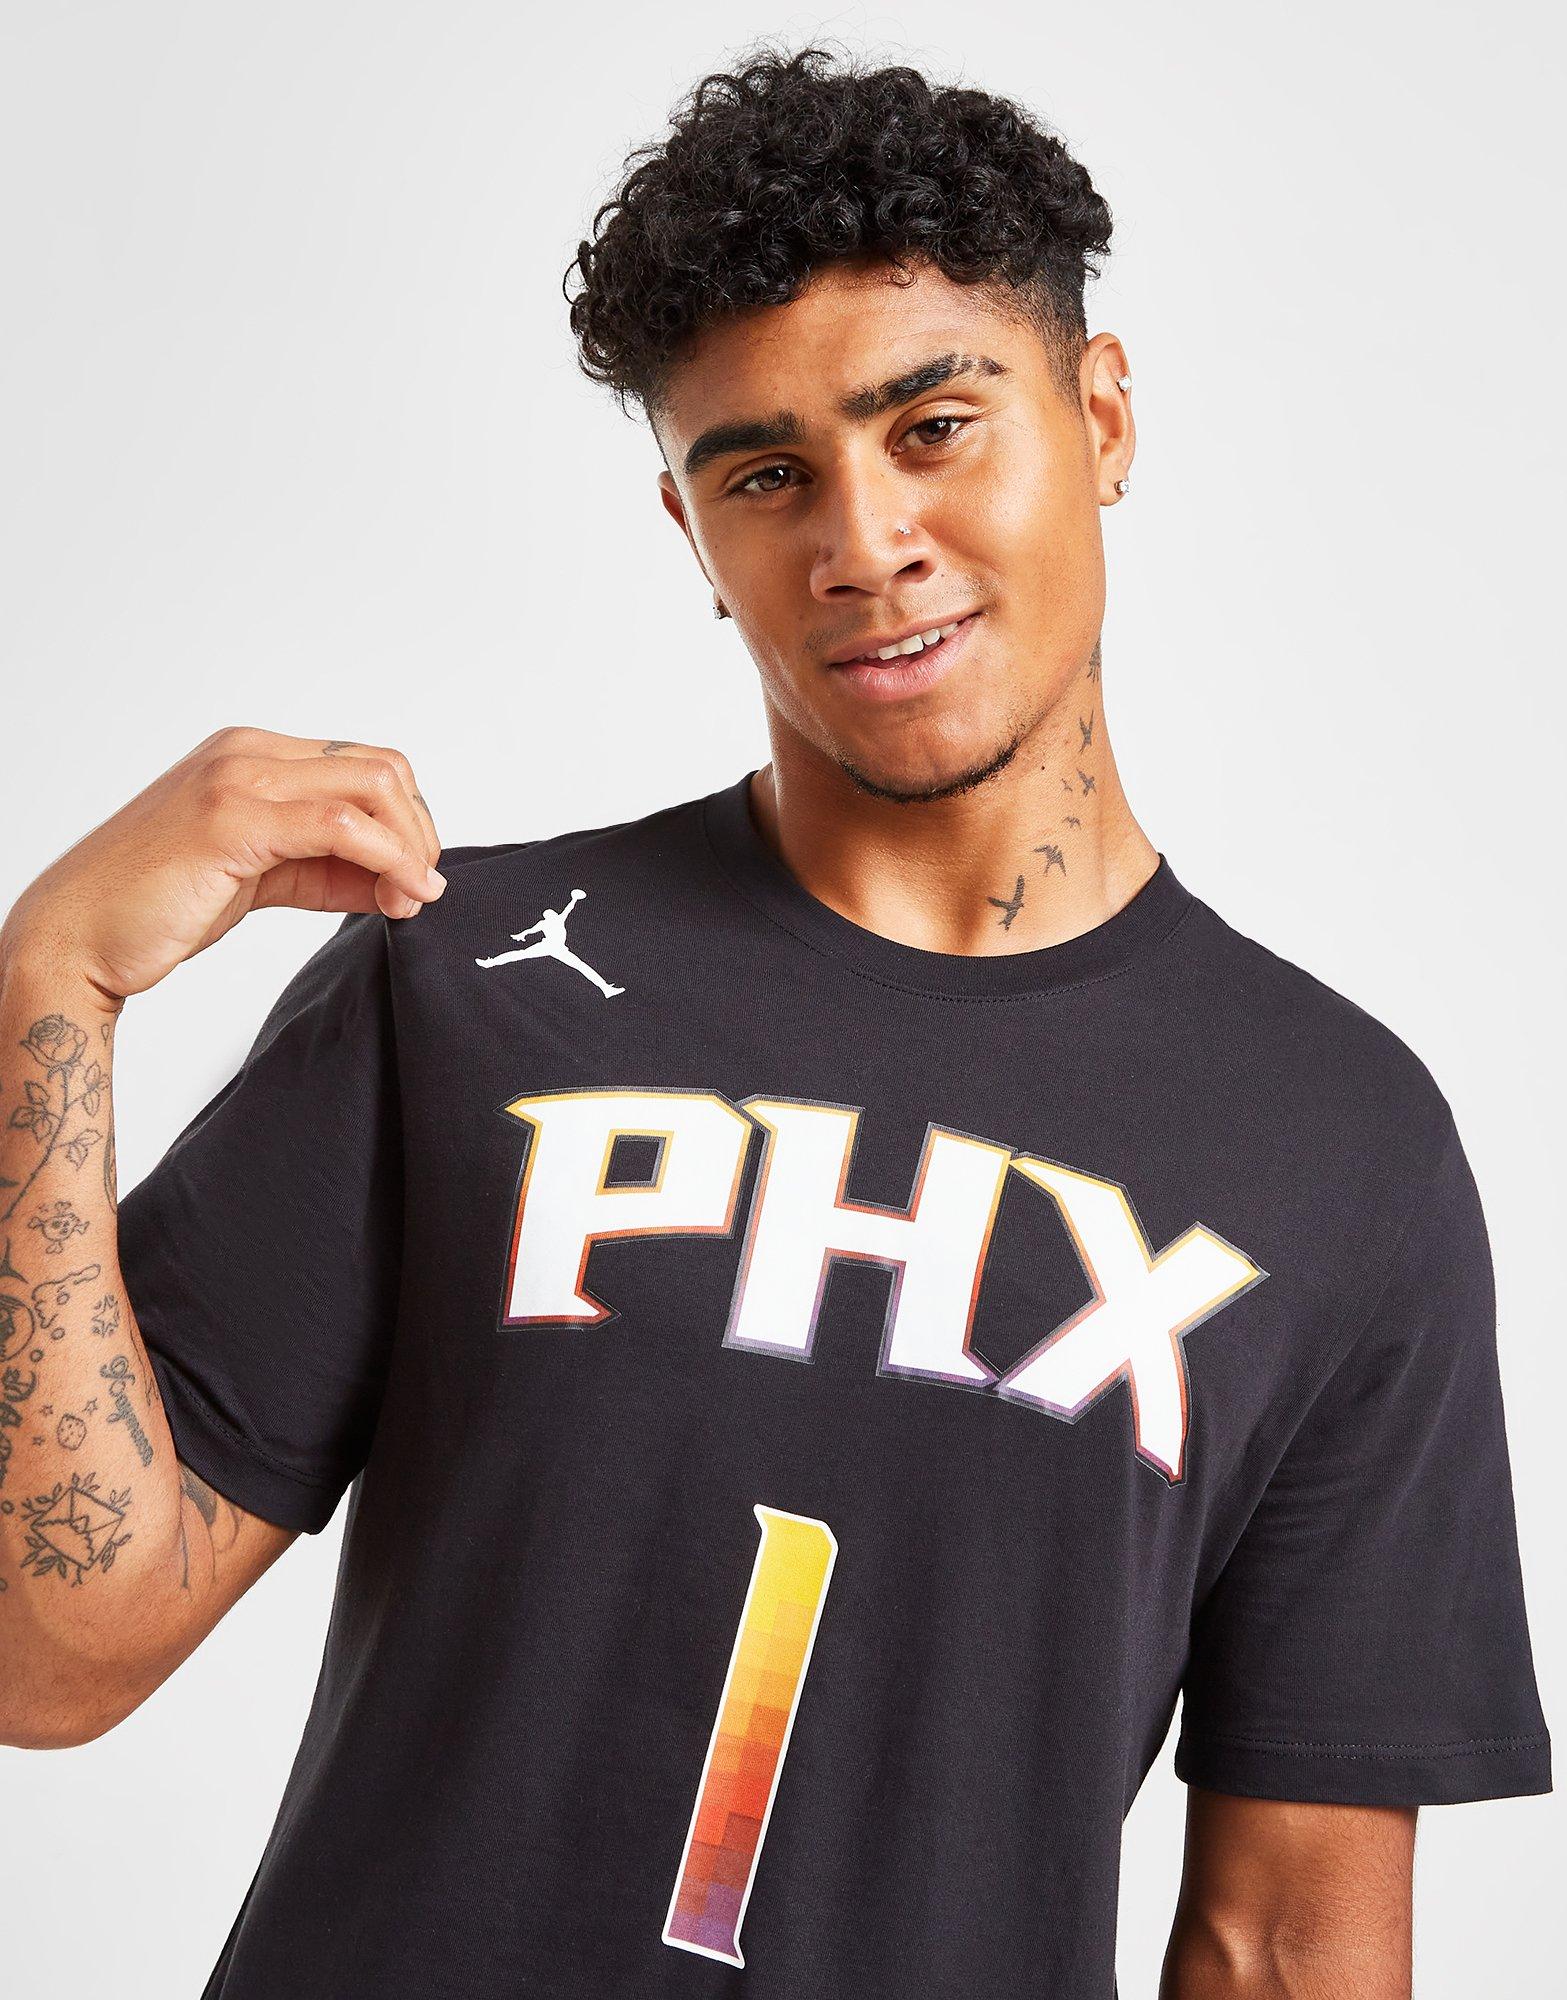 Phoenix Suns NBA All Over Crew Sweatshirt By Mitchell & Ness - Mens